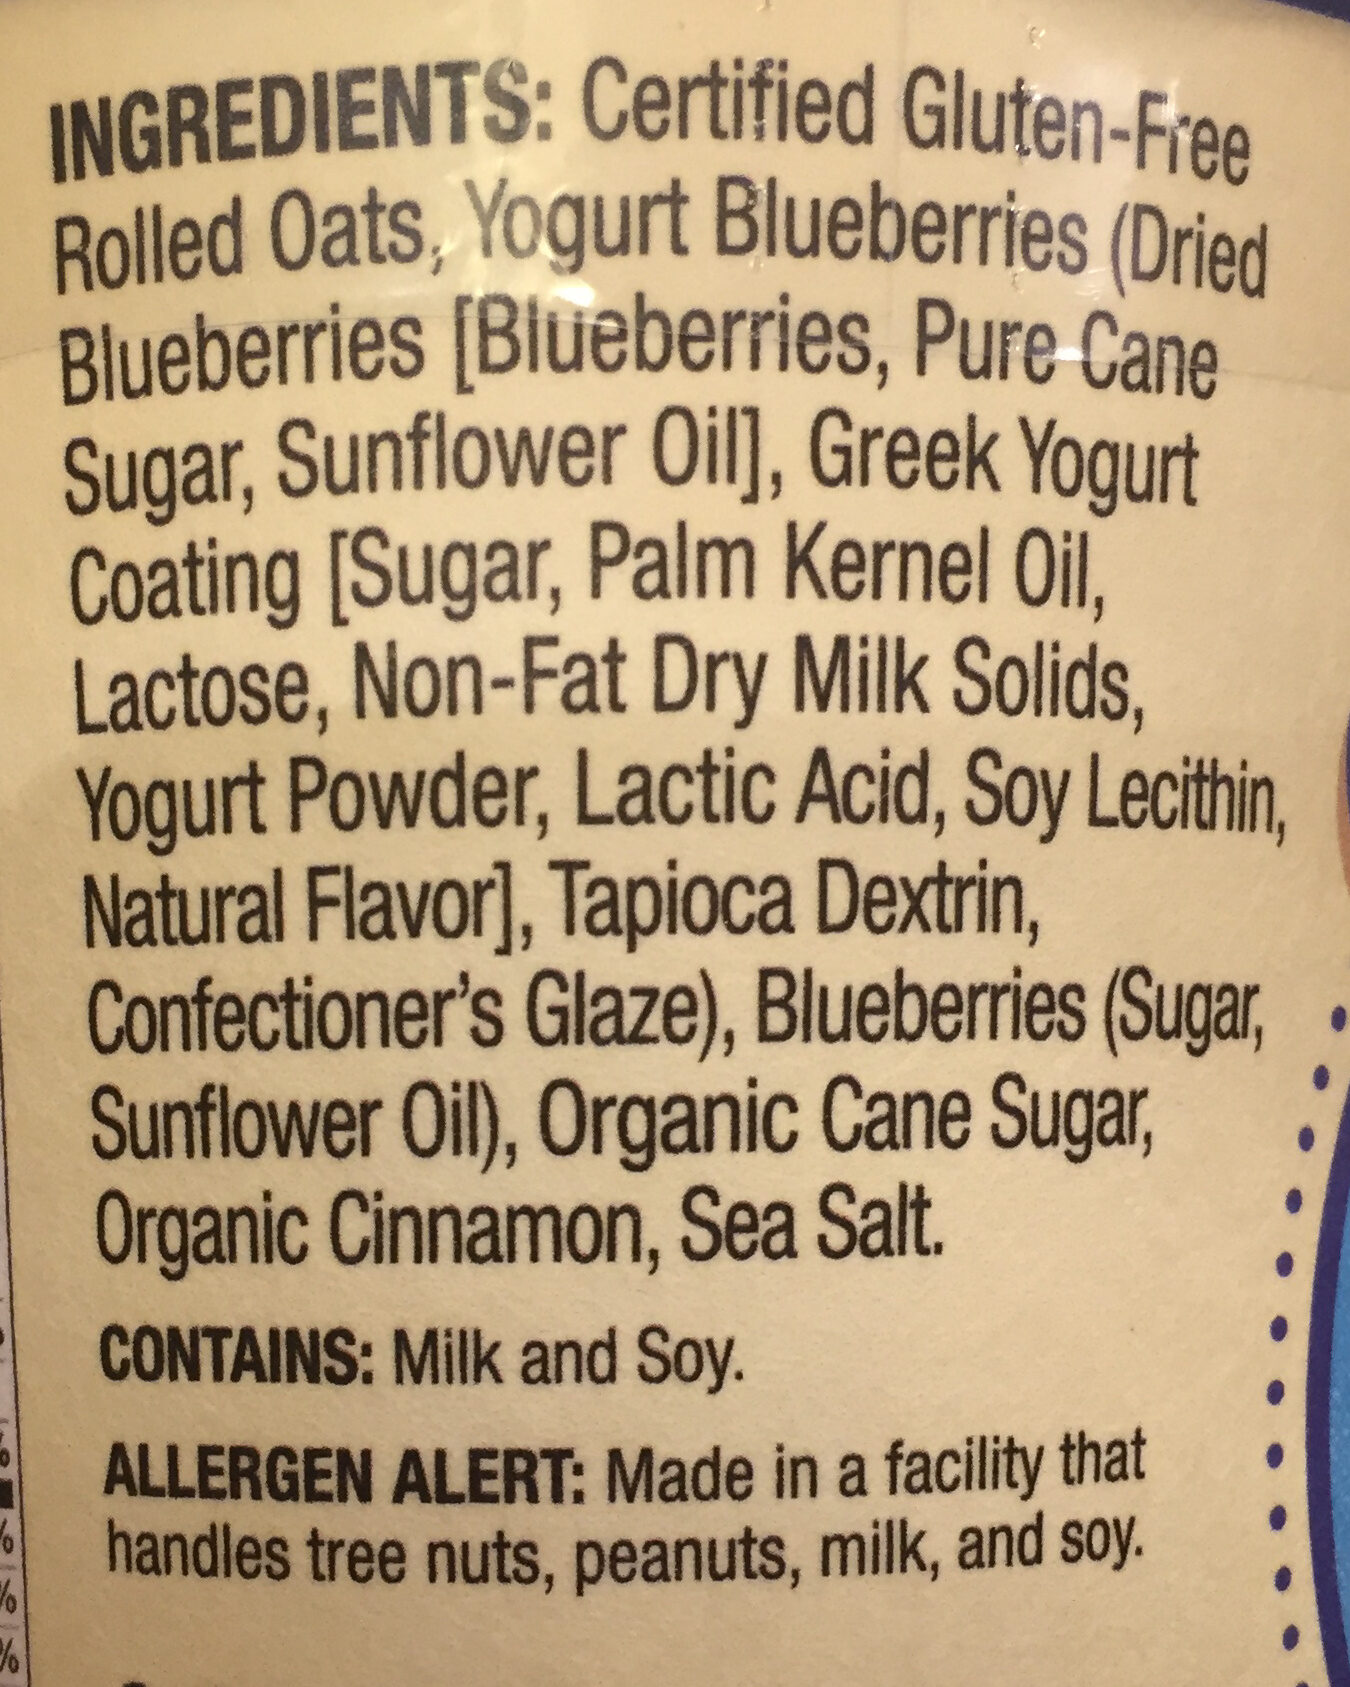 Straw propeller blueberry blitz gourmet oatmeal - Ingredients